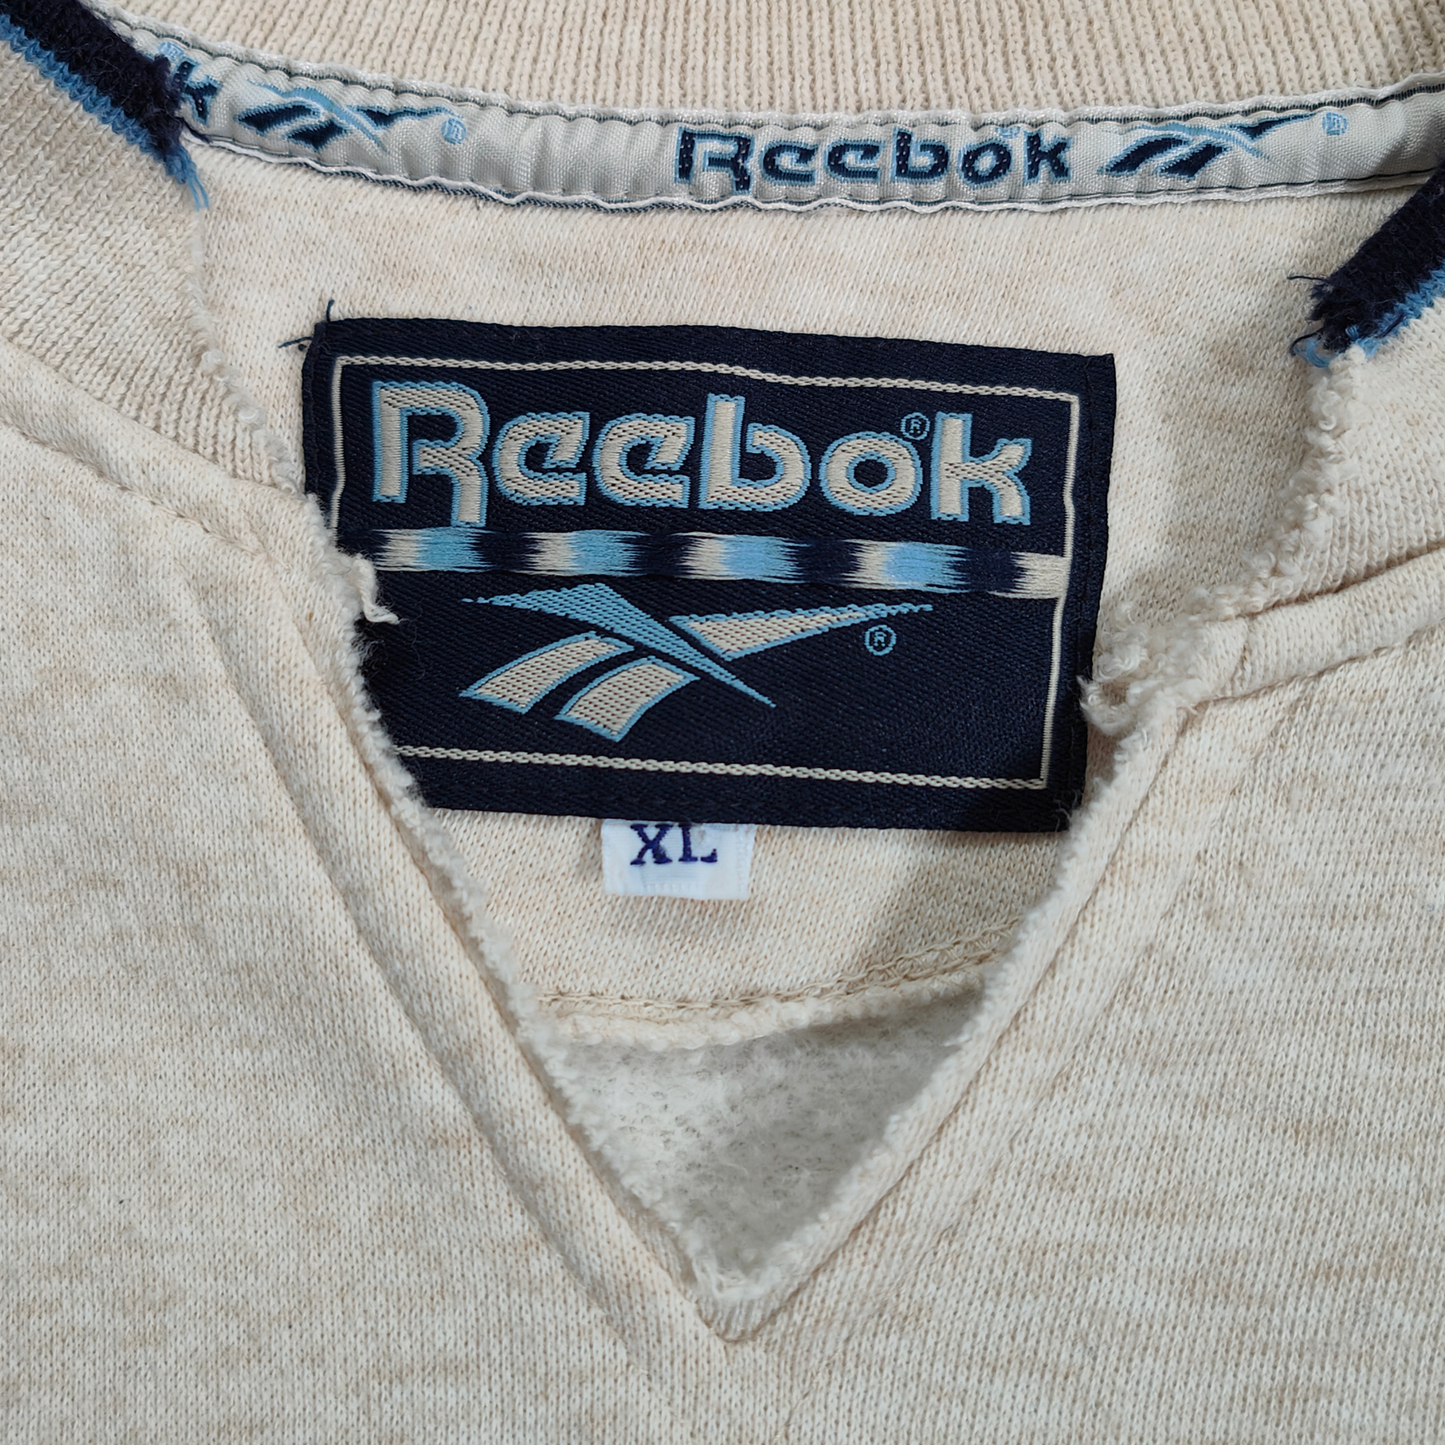 Reebok Vintage Cutoff Sweatshirt - XL